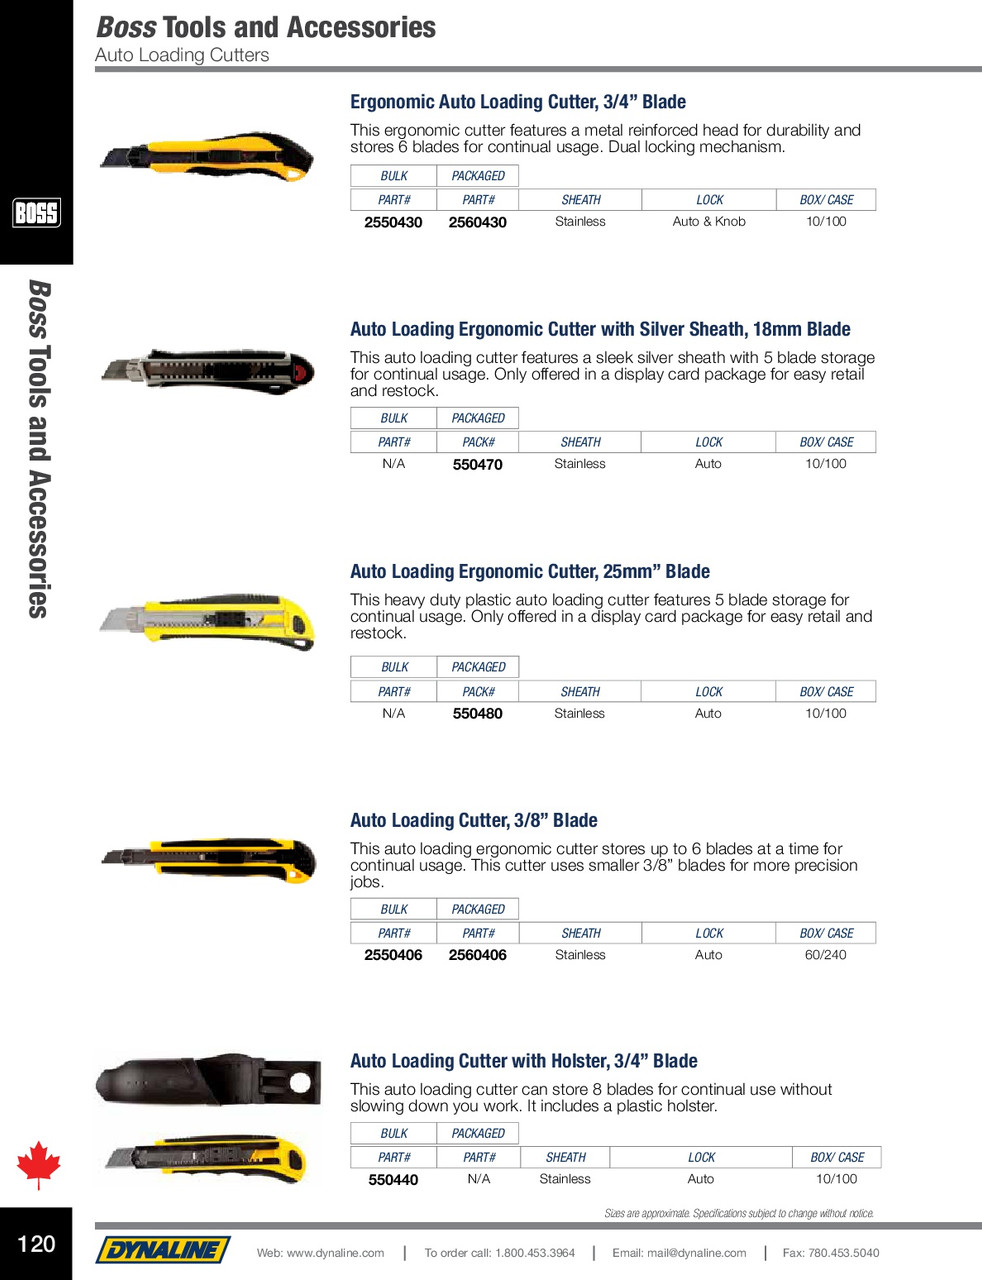 25mm Auto Loading 5 Blade Cutter w/Metal Reinforced Head Yellow  550480